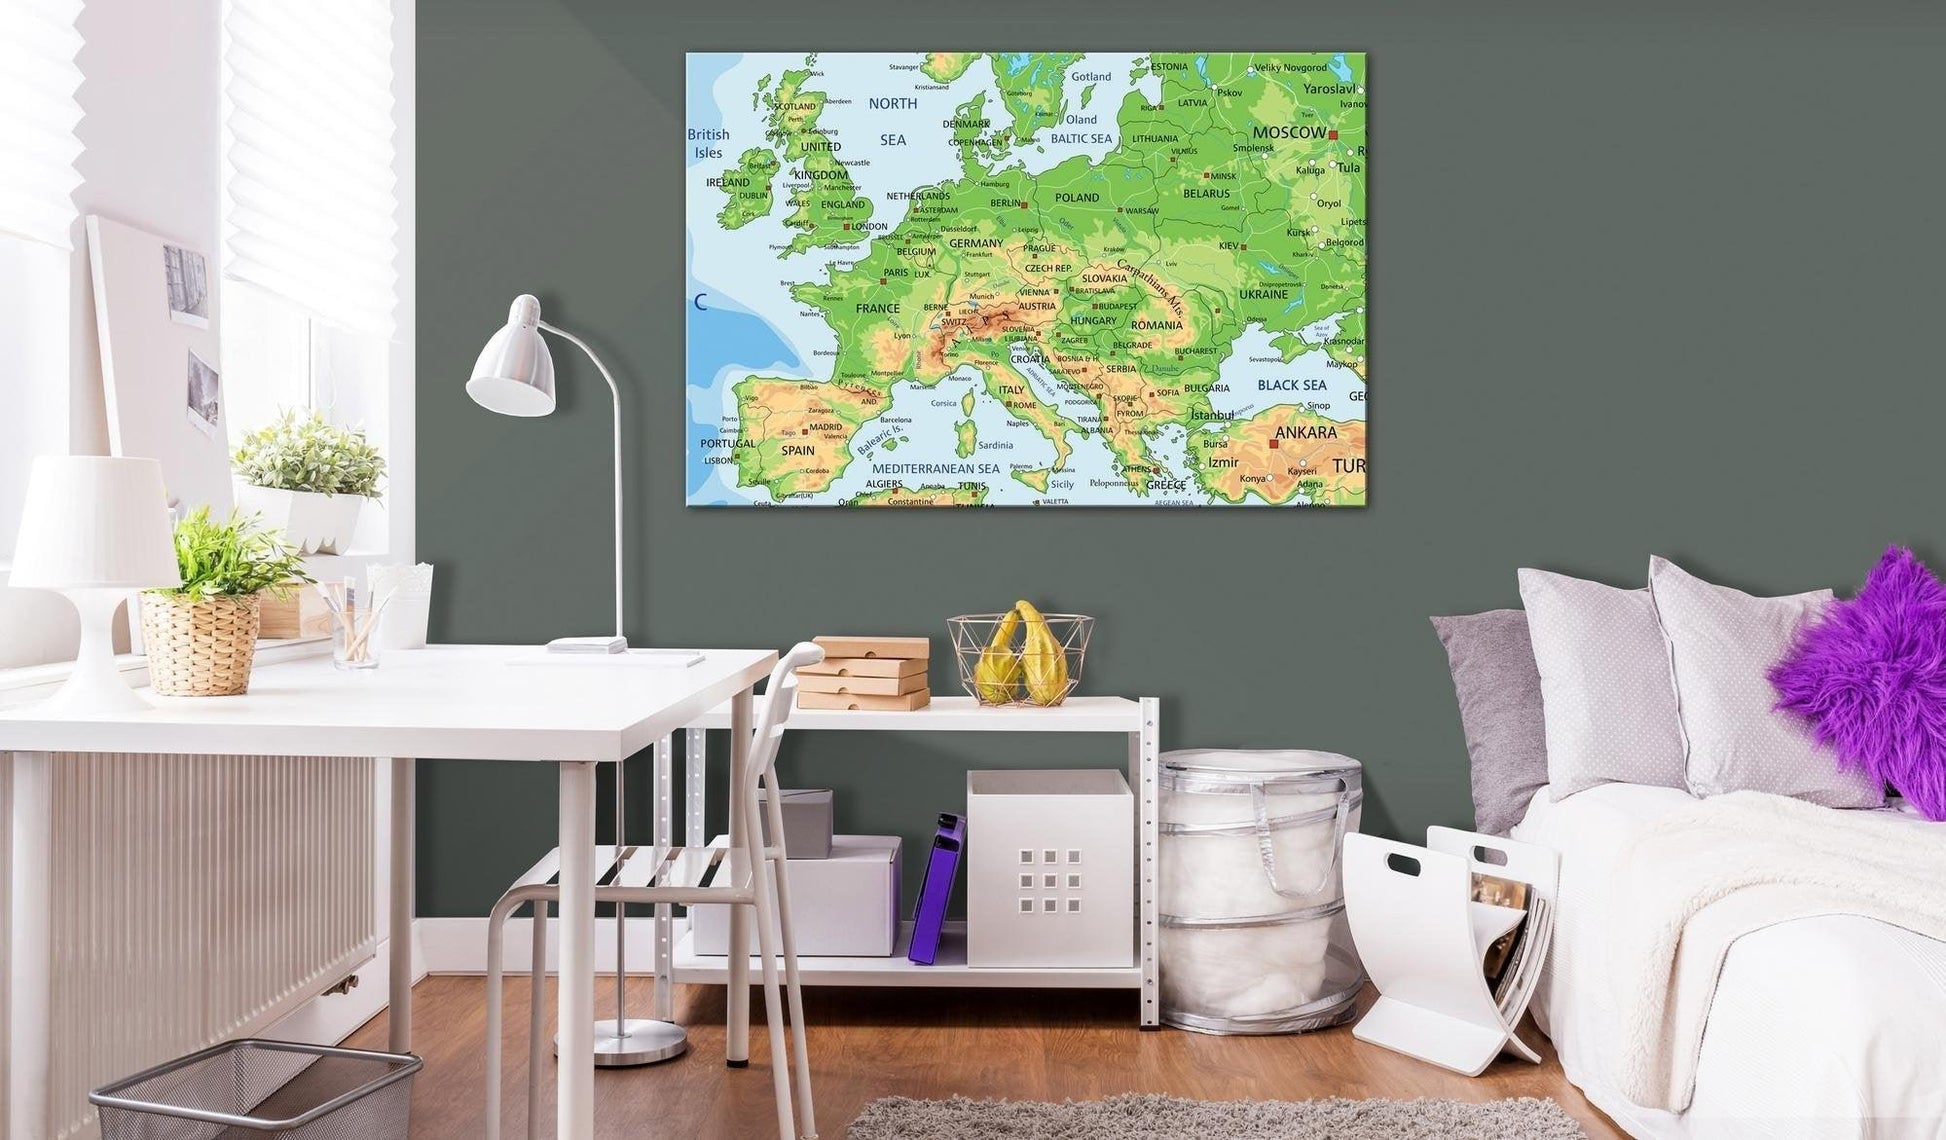 Decorative Pinboard - Europe [Cork Map] - www.trendingbestsellers.com